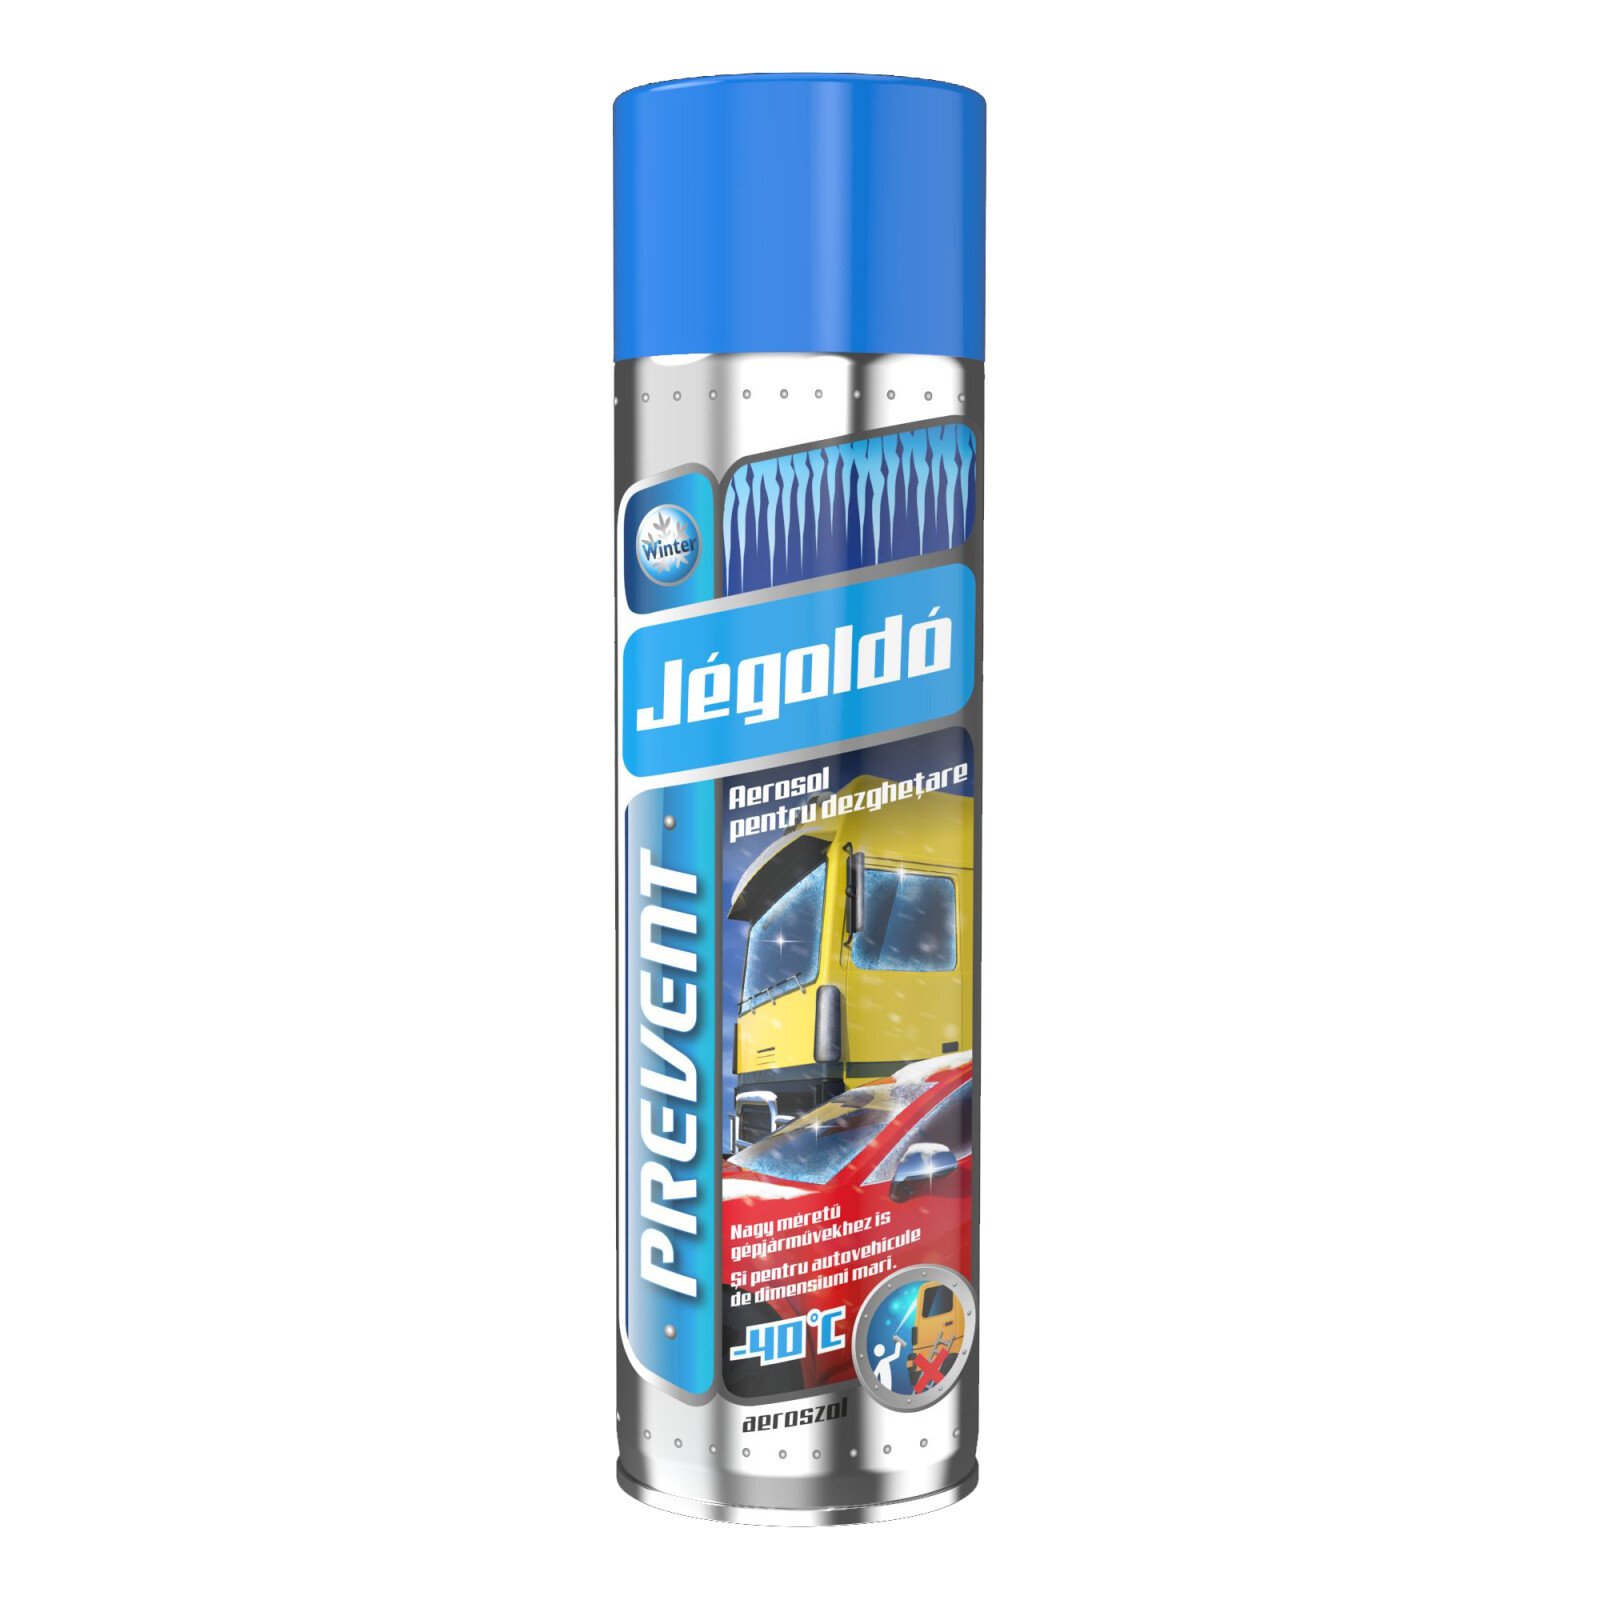 Prevent windscreen de icer spray y, truck, bus -40°C - 600ml thumb